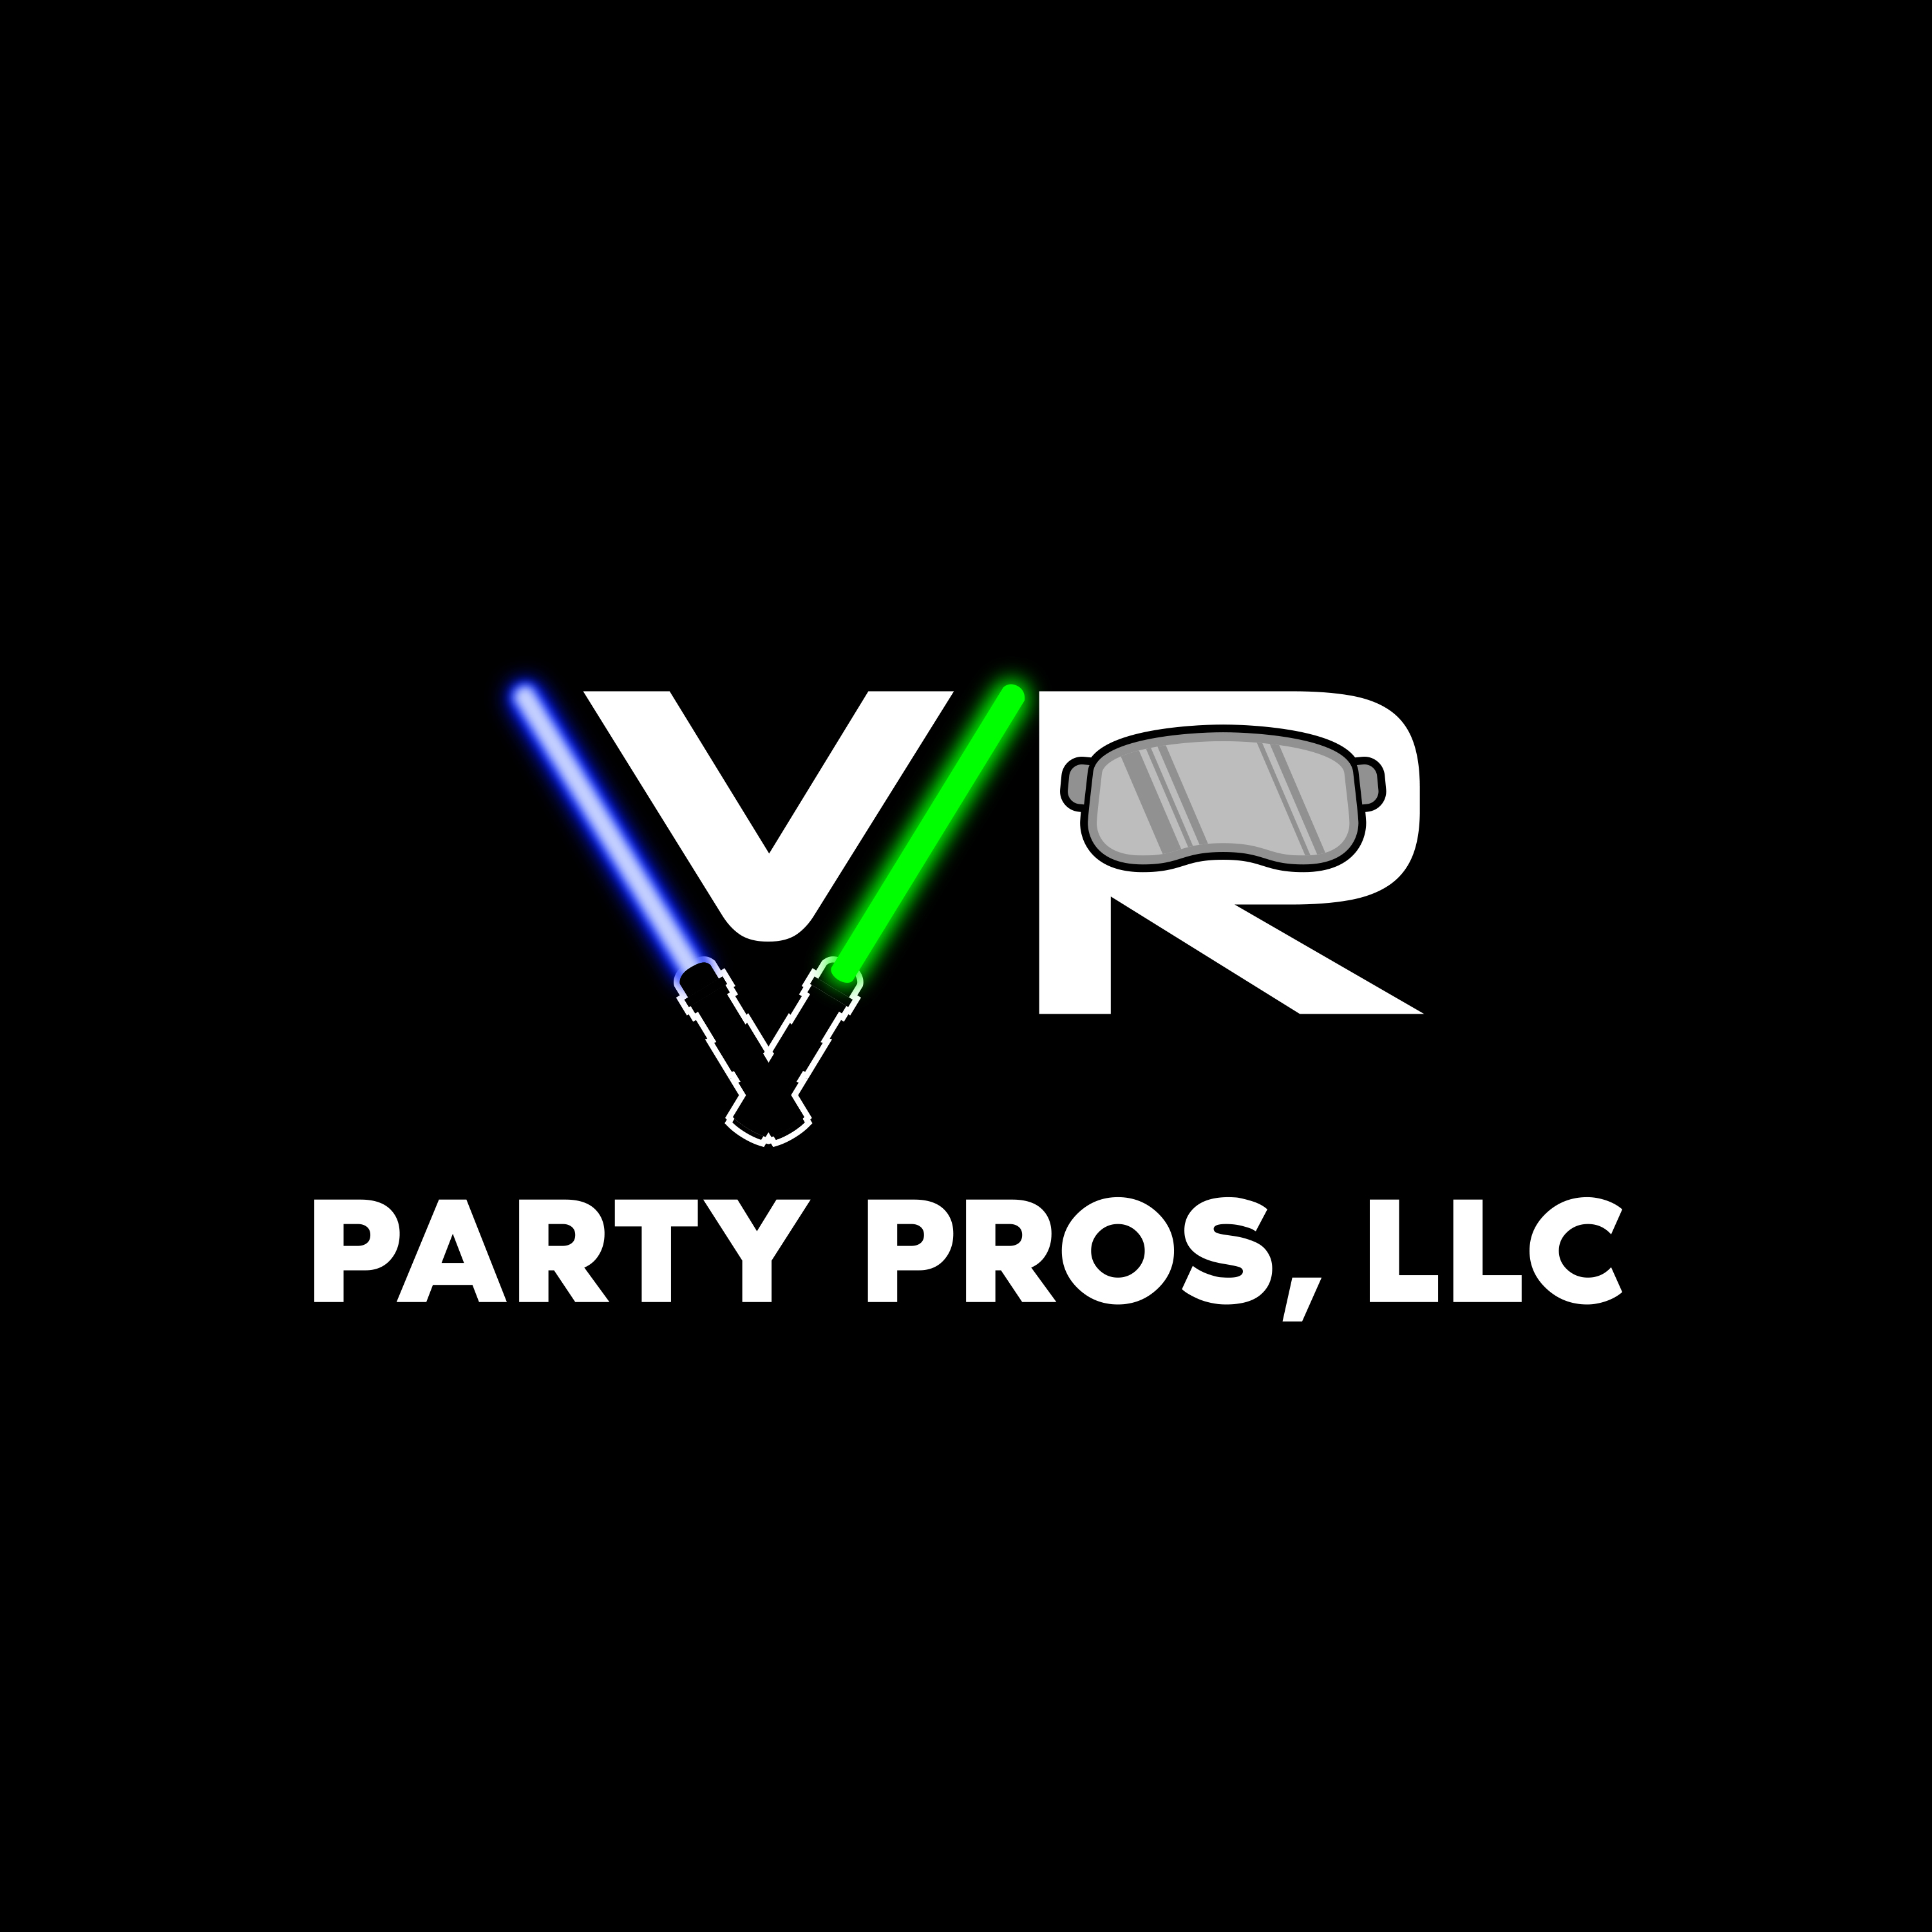 VR Party Pros, LLC